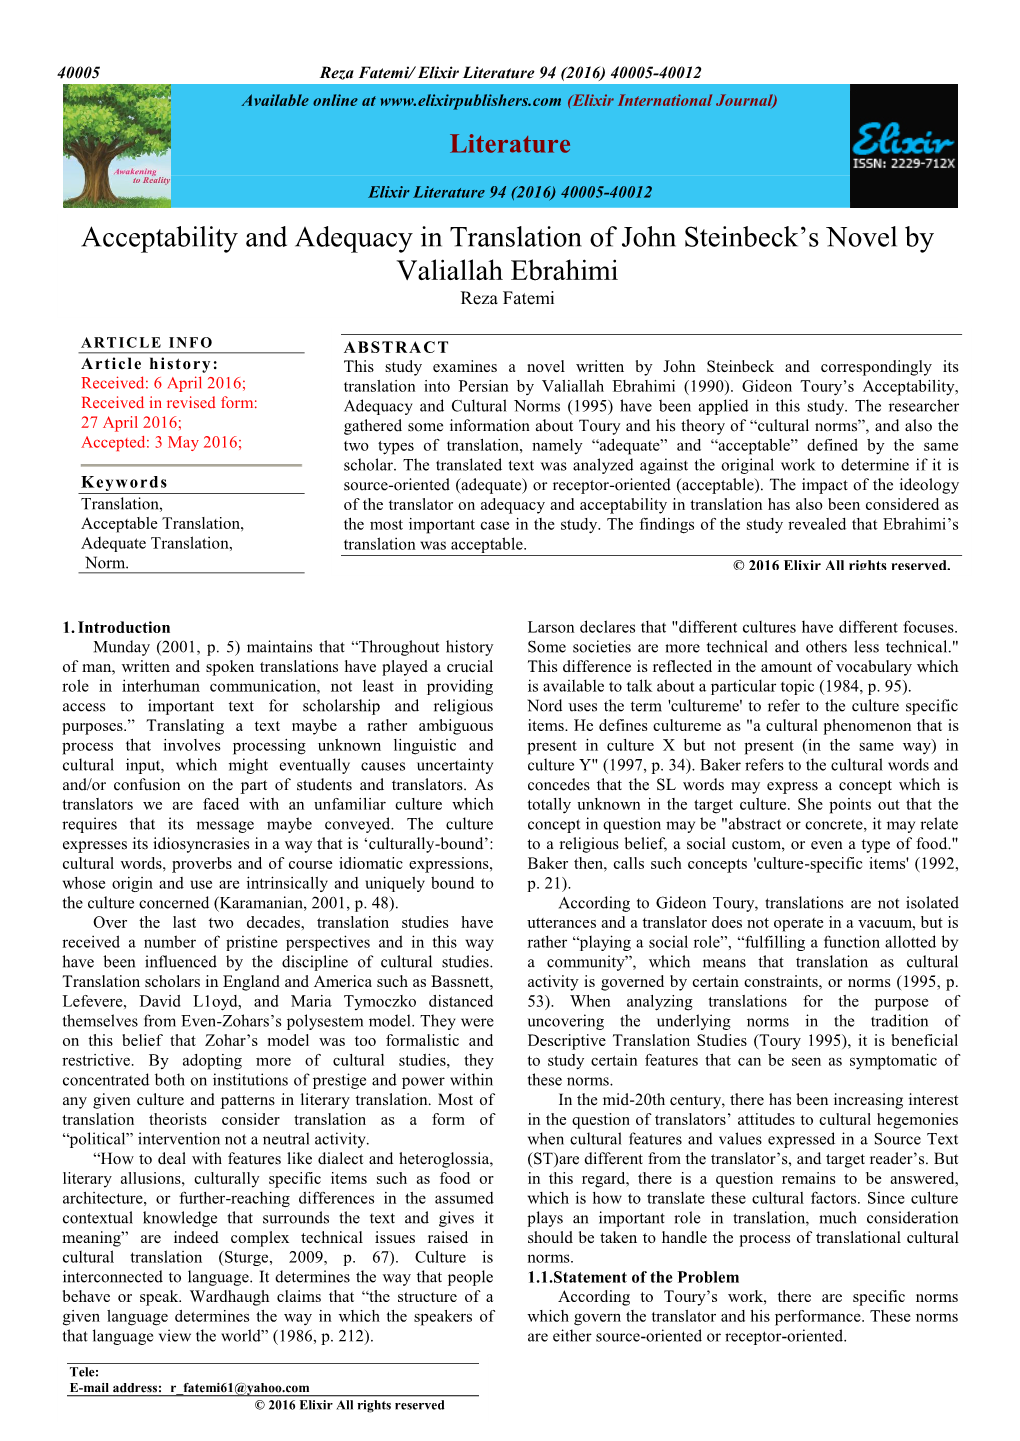 Acceptability and Adequacy in Translation of John Steinbeck's Novel by Valiallah Ebrahimi